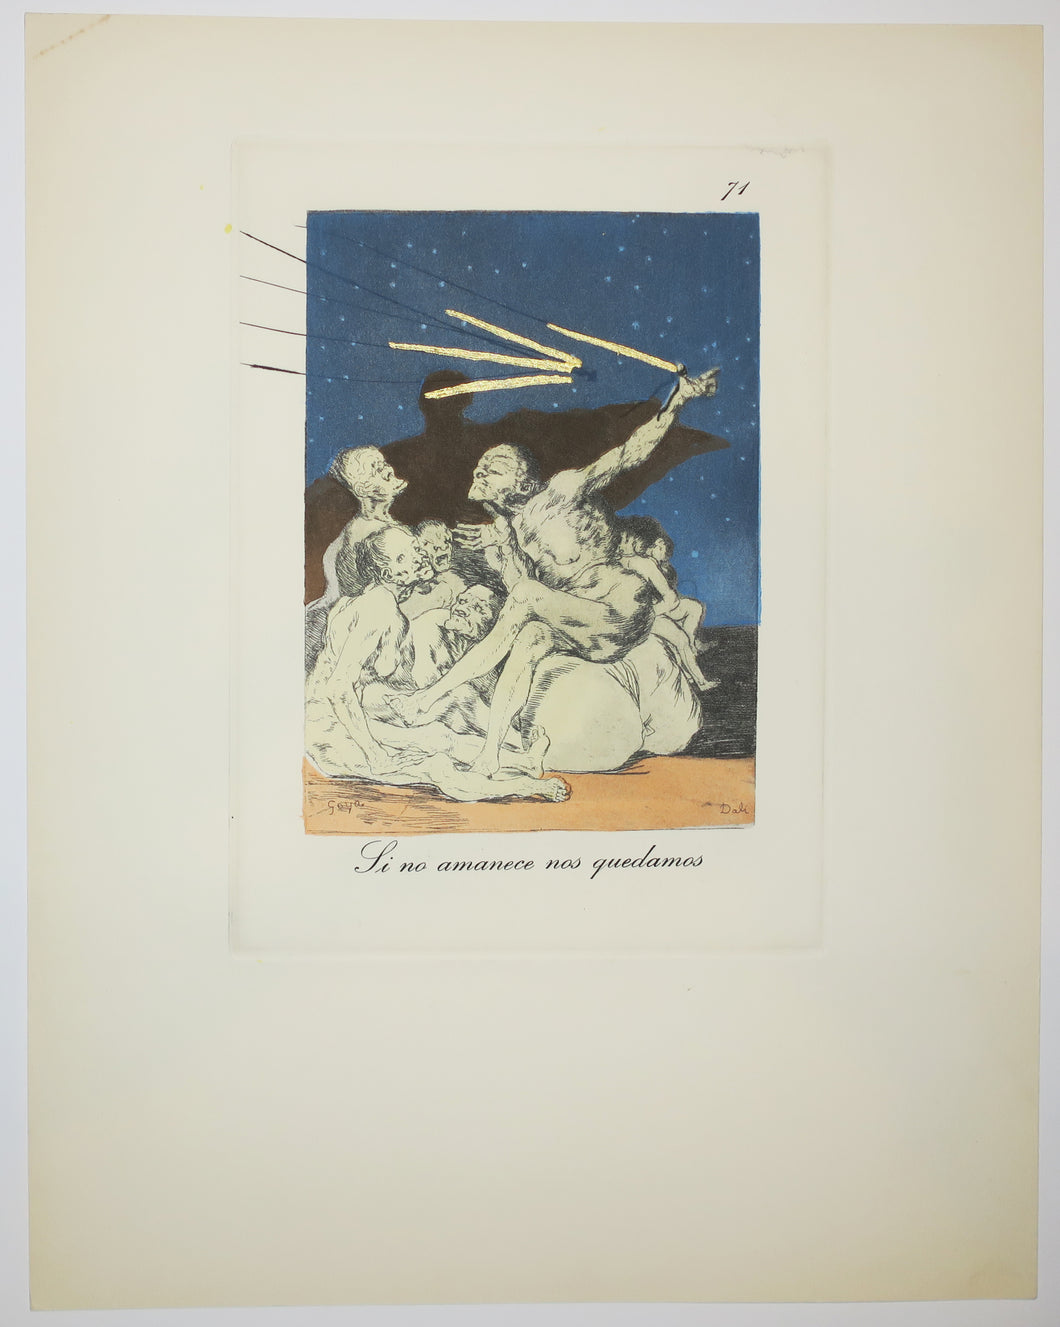 Si no amanece nos quedamos. Les Caprices de Goya de Dali.  1977.